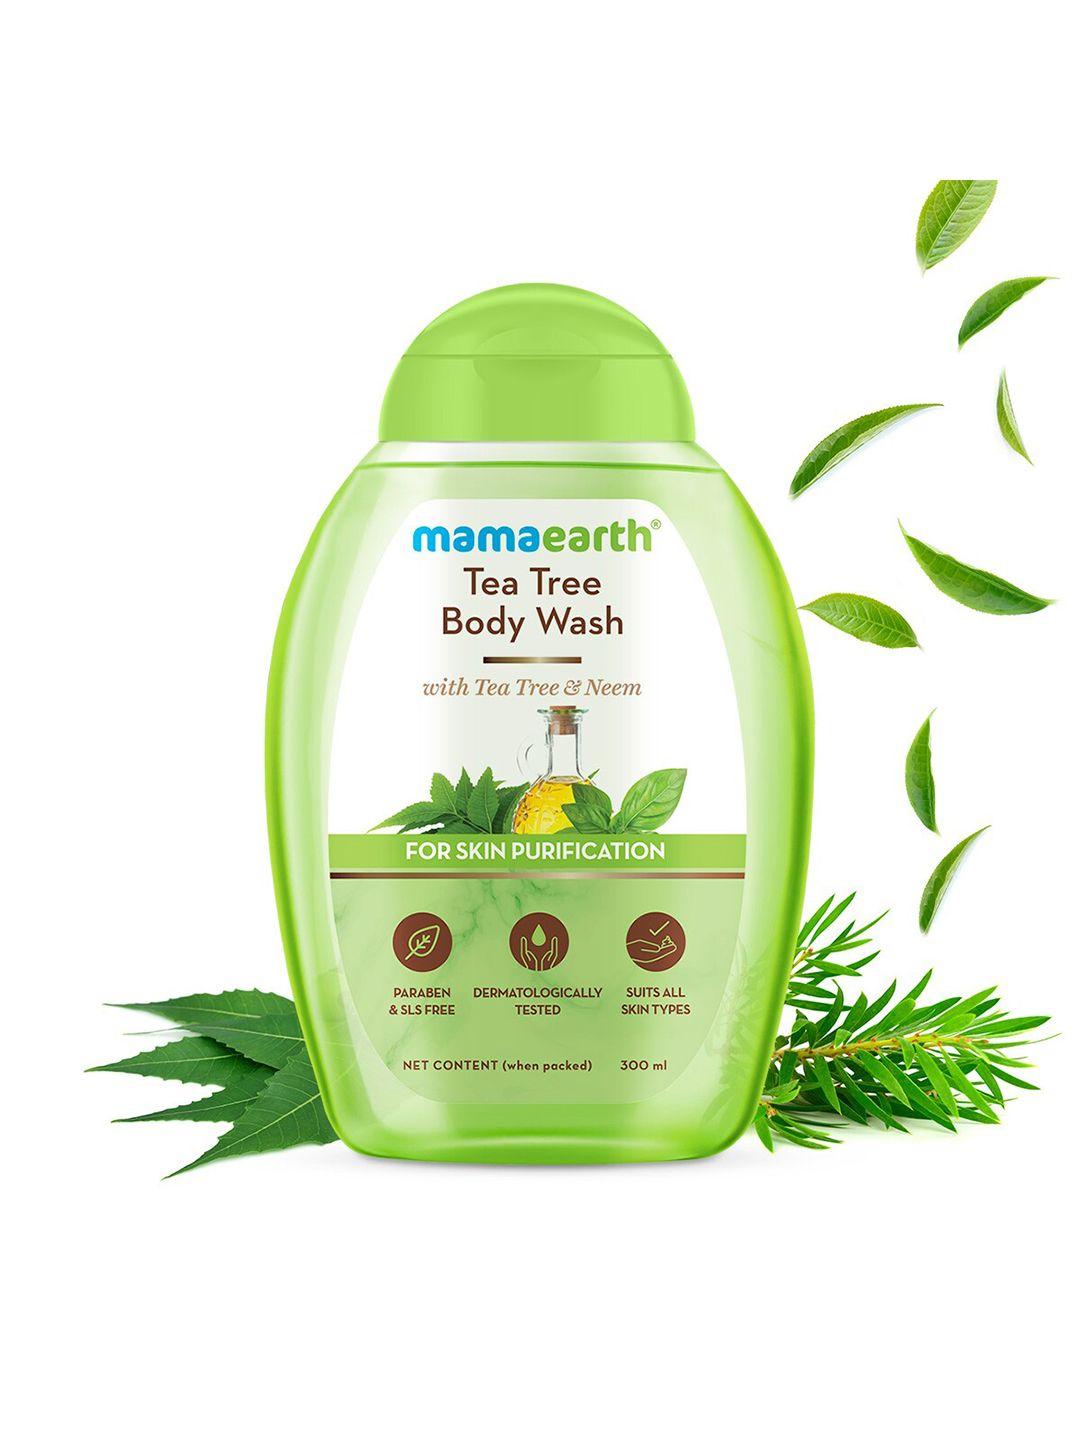 mamaearth tea tree body wash with neem for skin purification - 300 ml